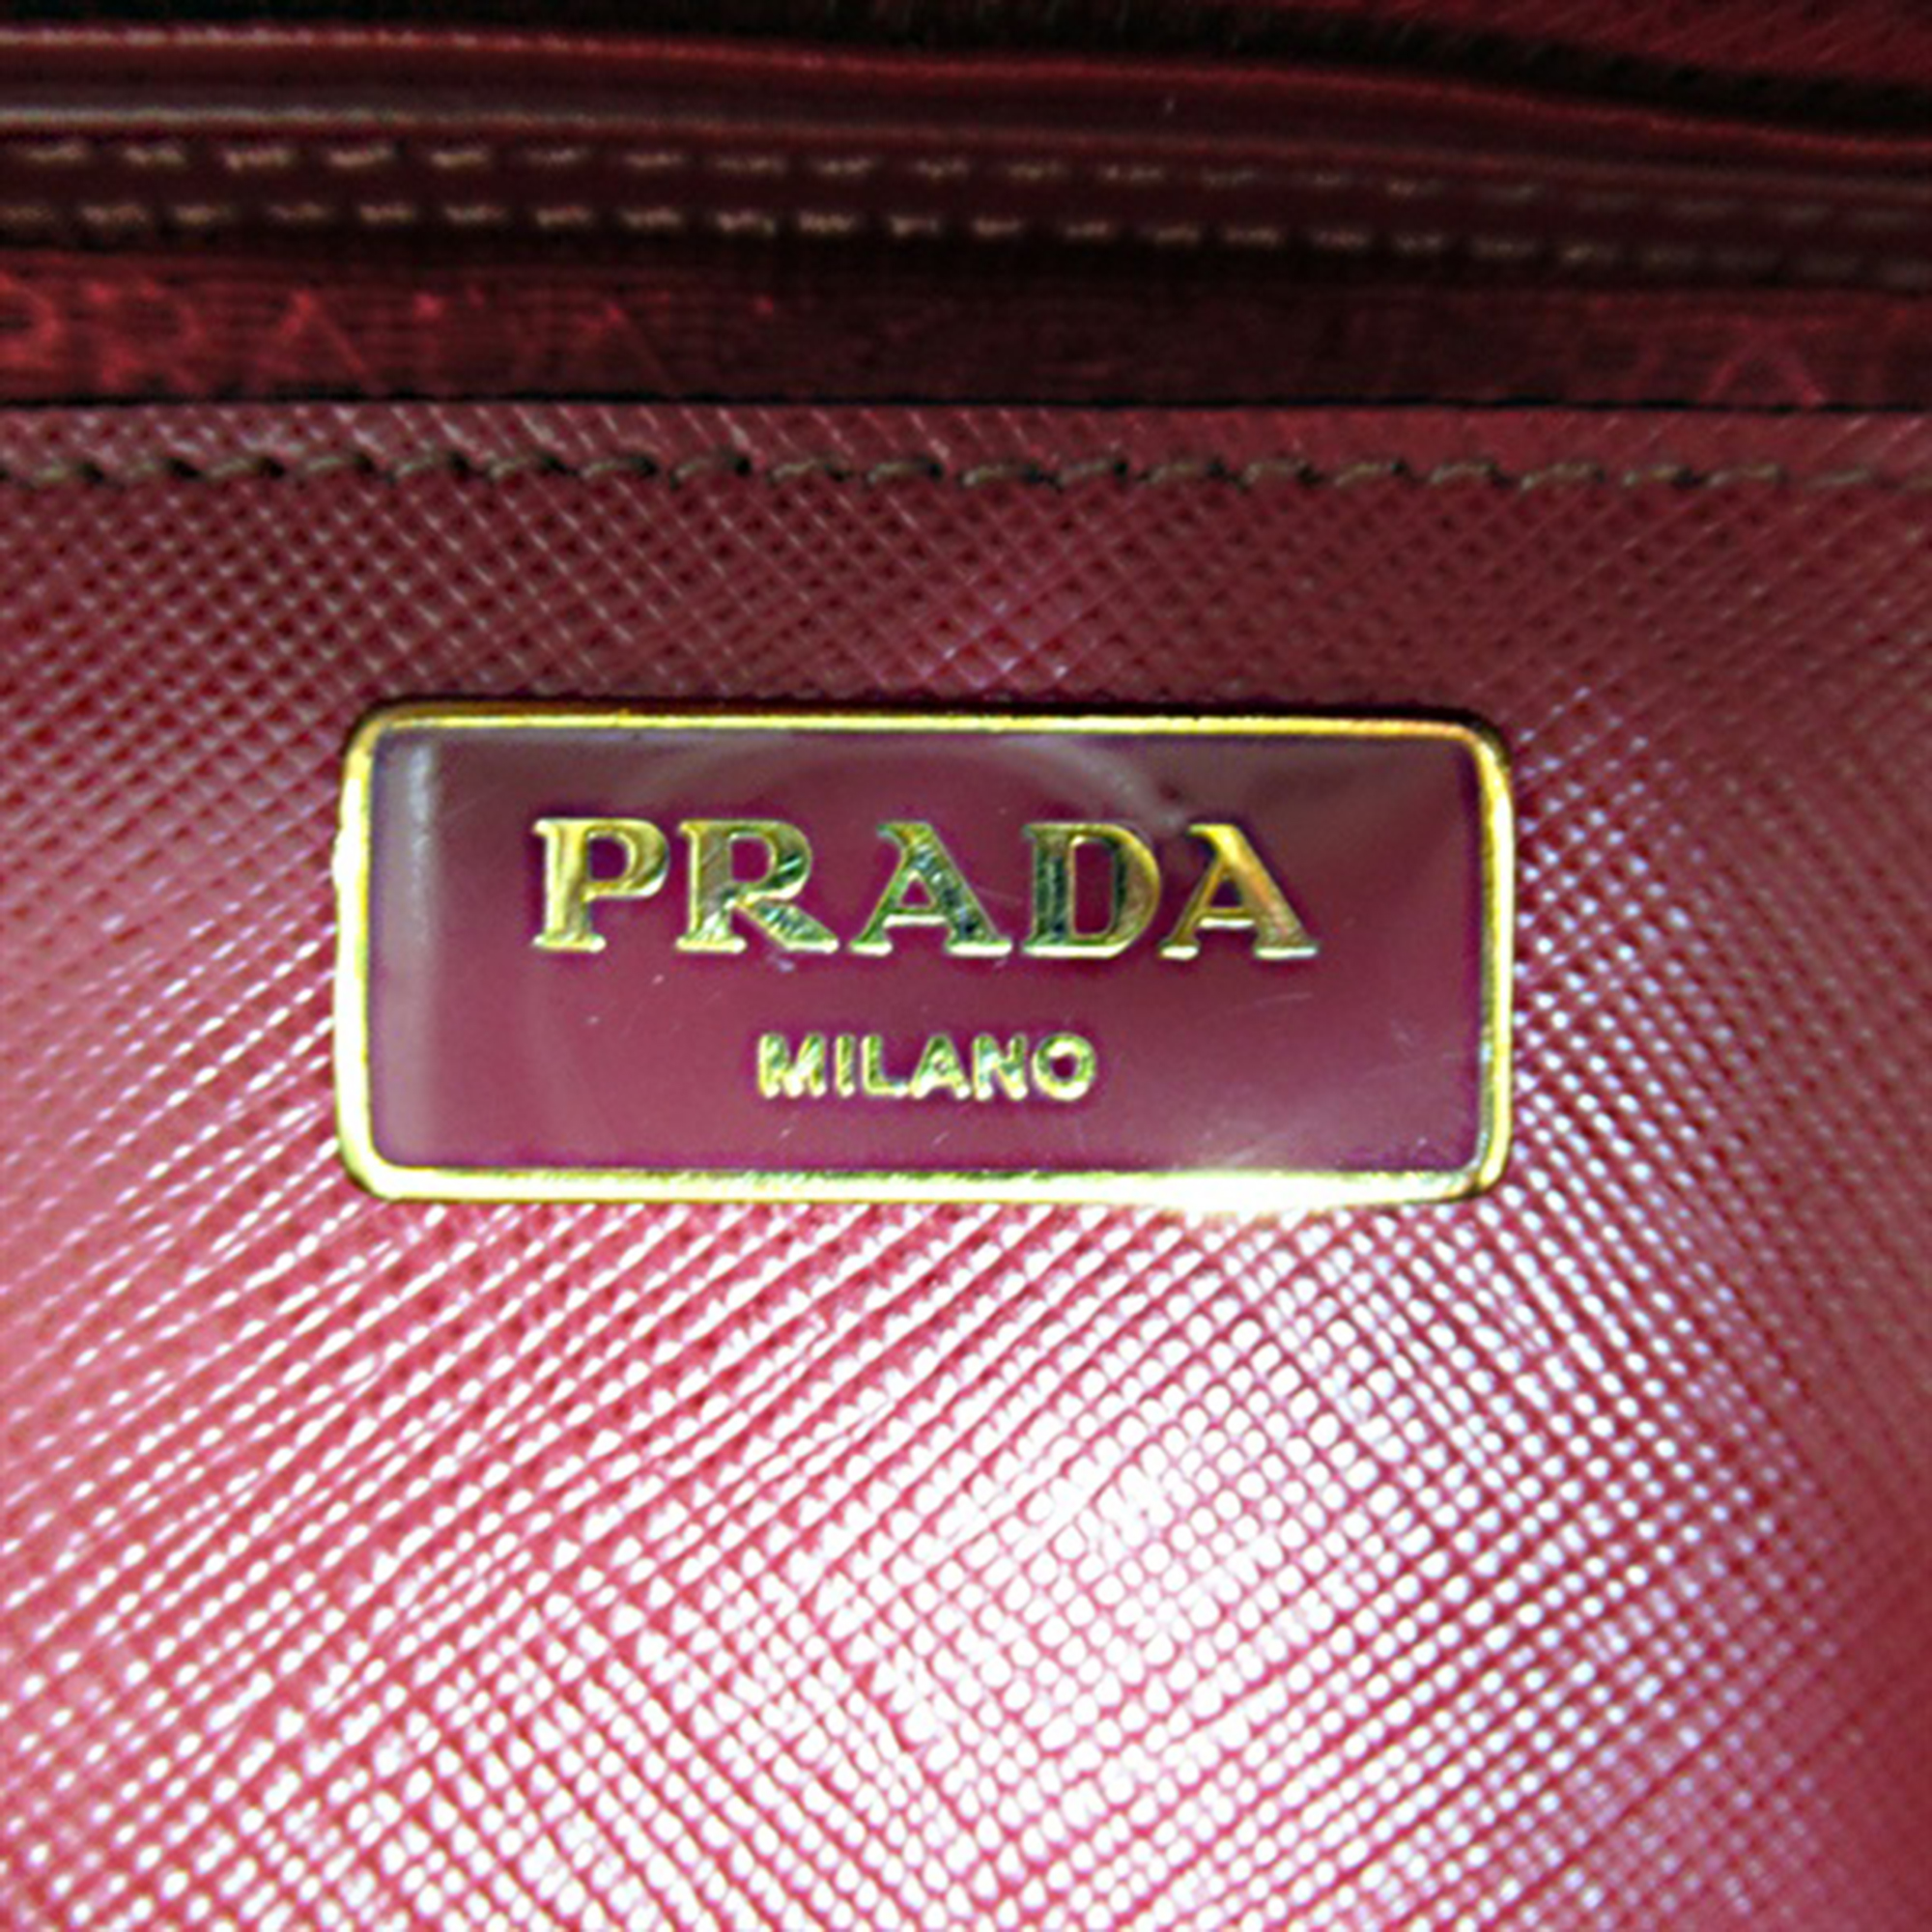 Prada Red Leather Saffiano Double Zip Tote Bag